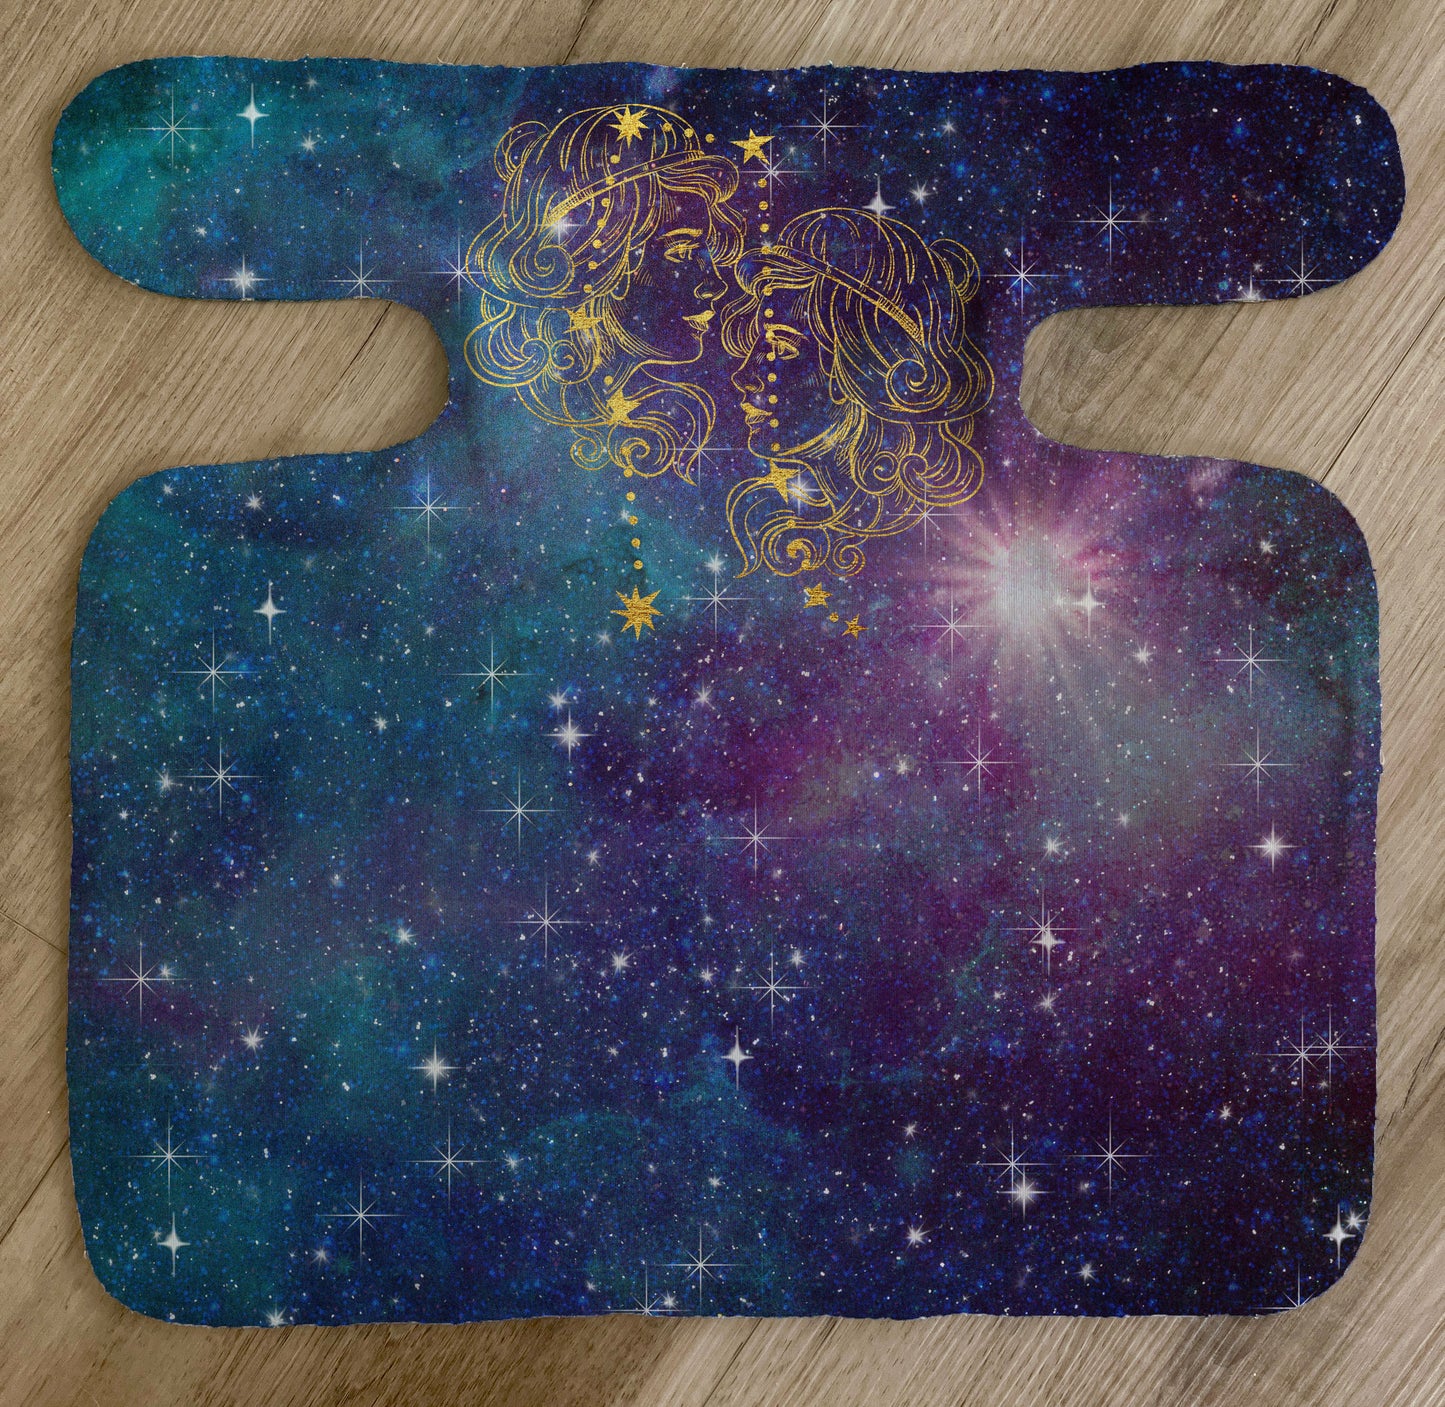 Constellations/Zodiac Preflat